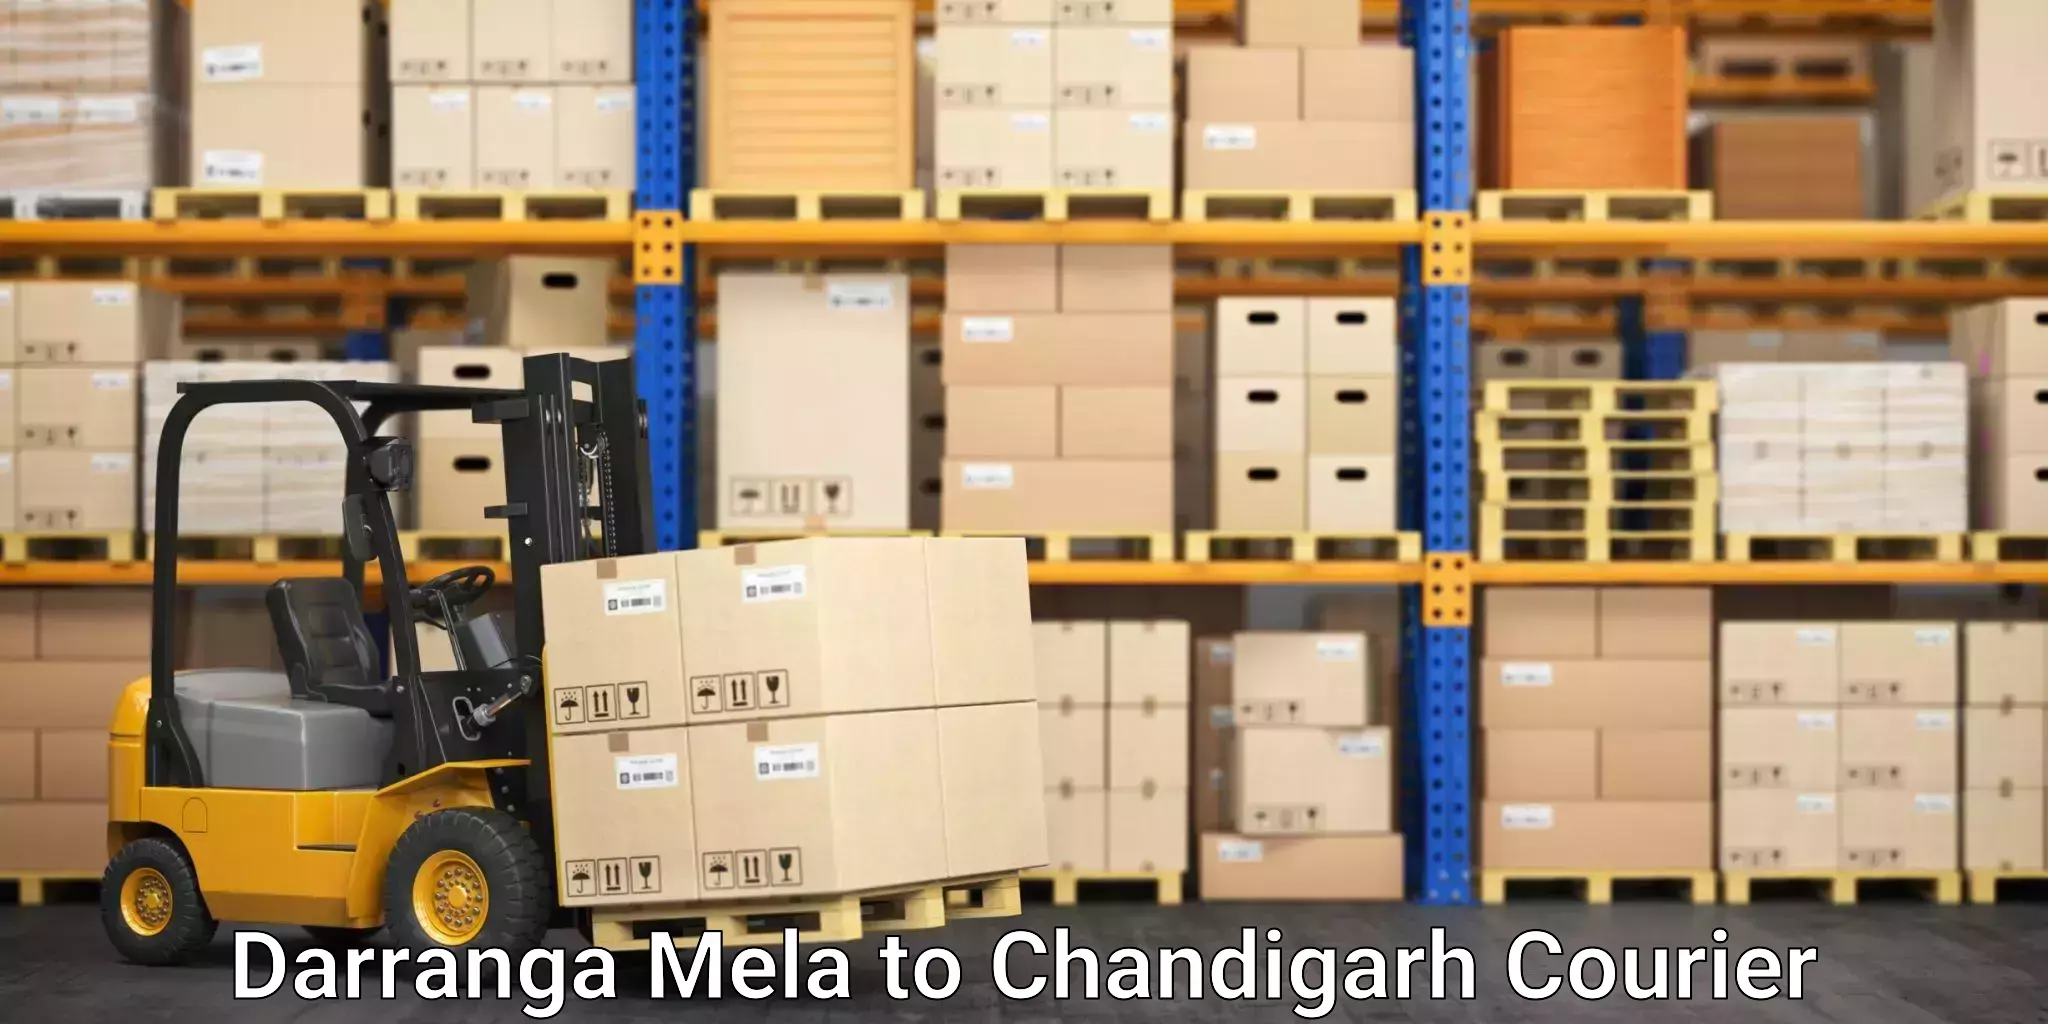 Reliable shipping partners Darranga Mela to Panjab University Chandigarh